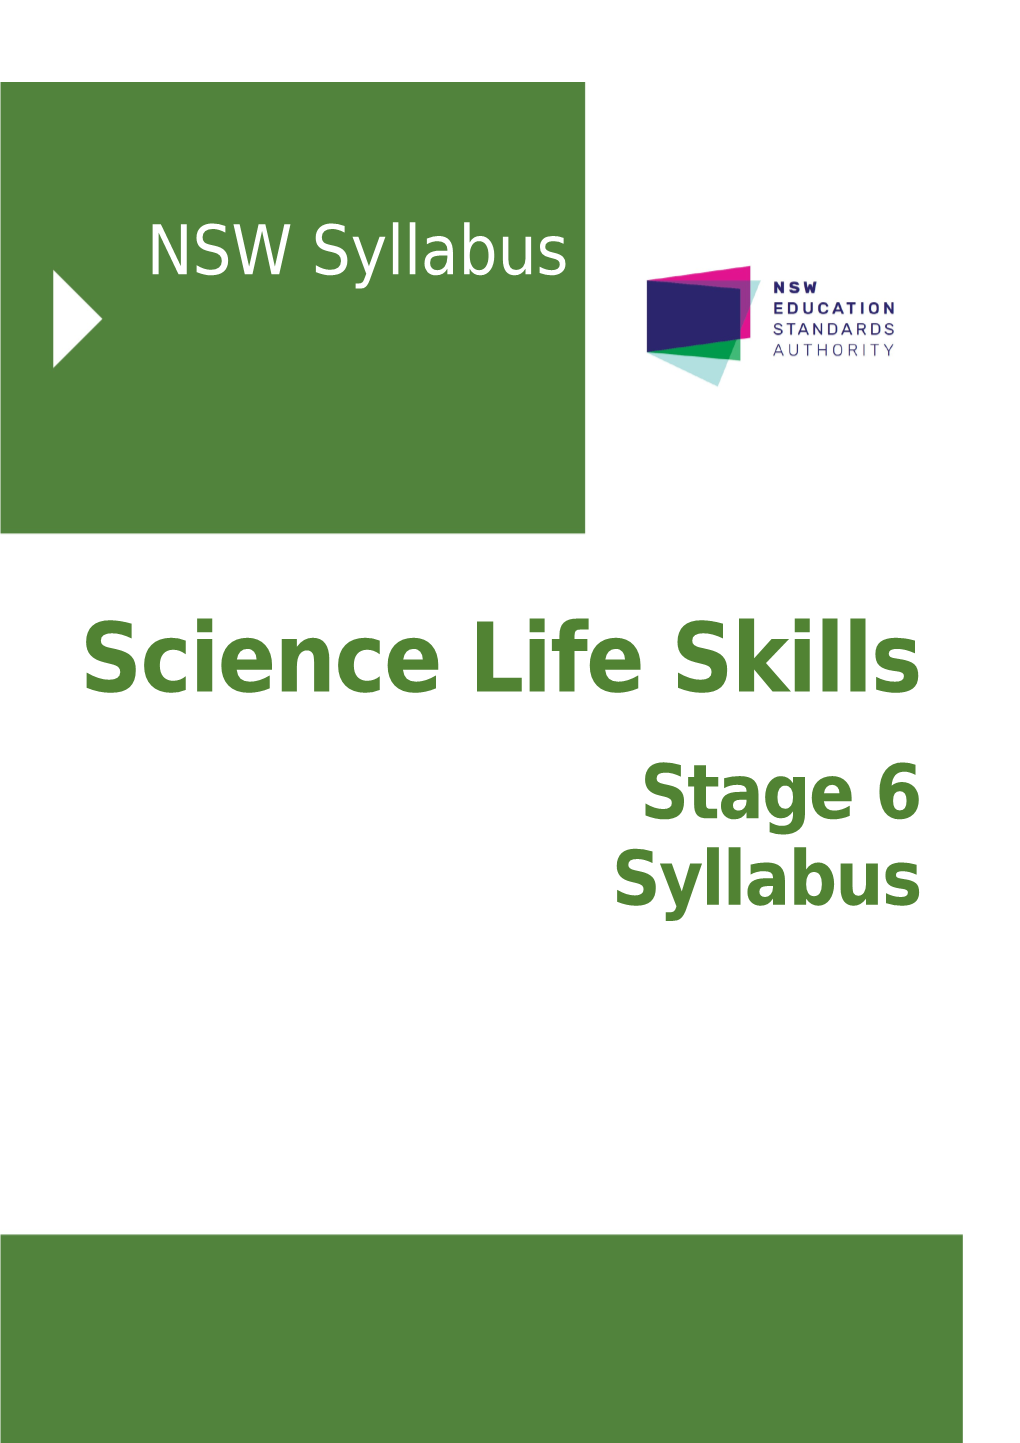 Science Life Skills Stage 6 Syllabus 2017